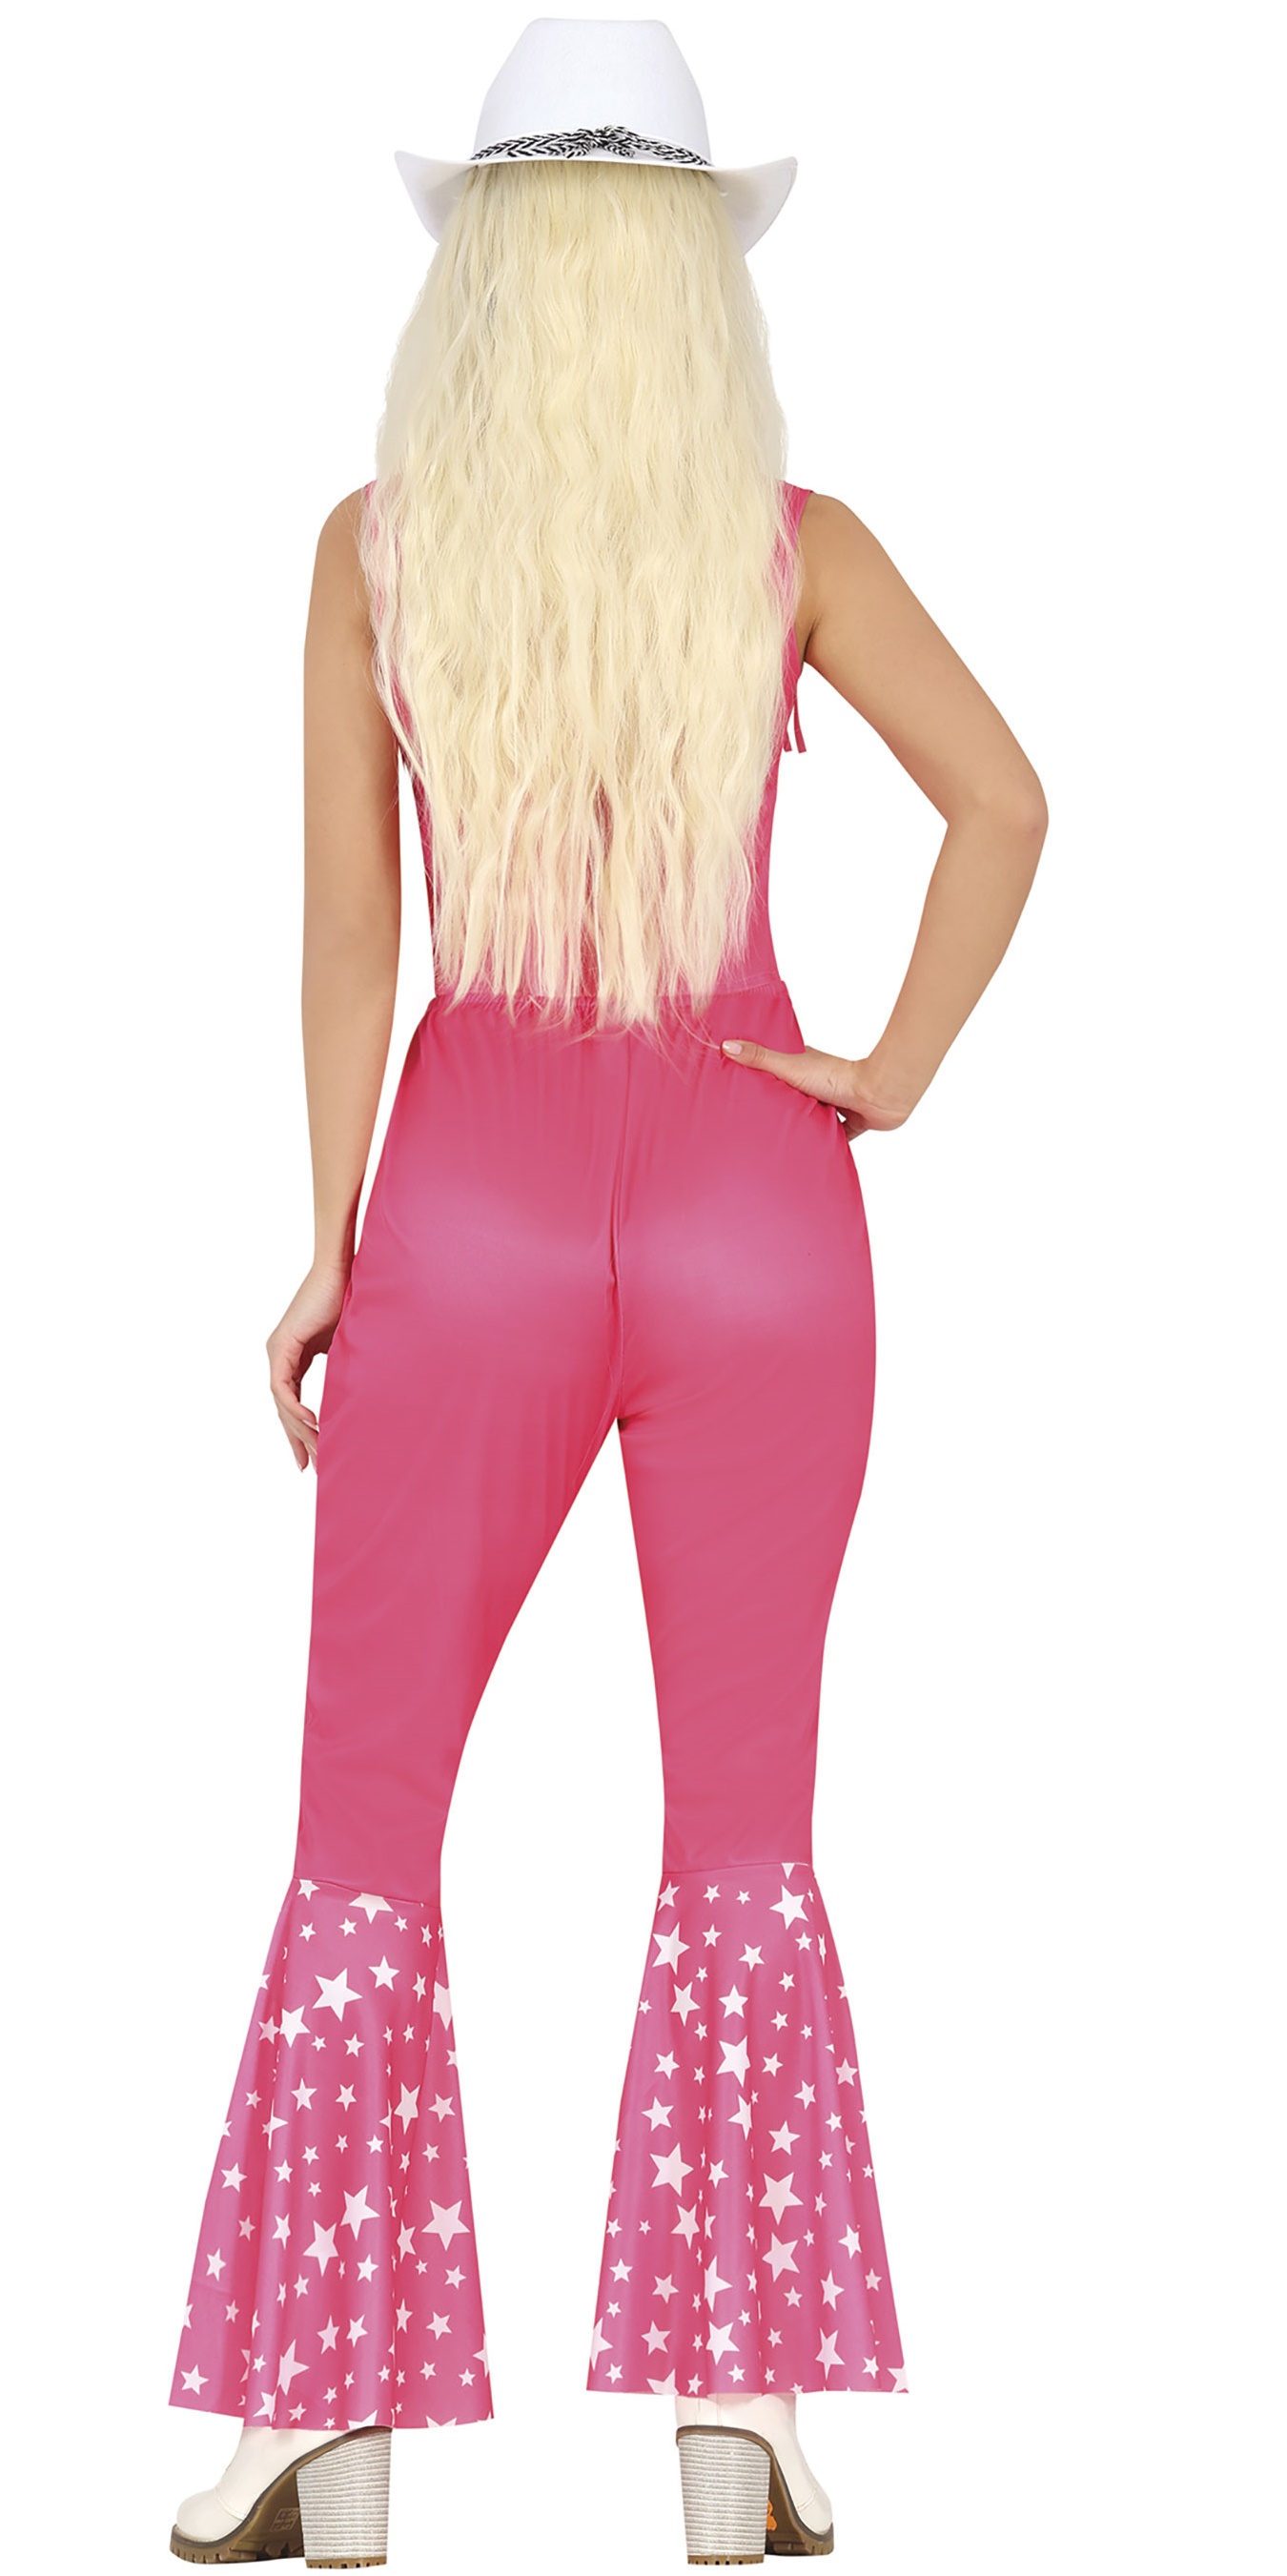 Disfraz Barbie Vaquerita Rosa Para Niña - $ 899